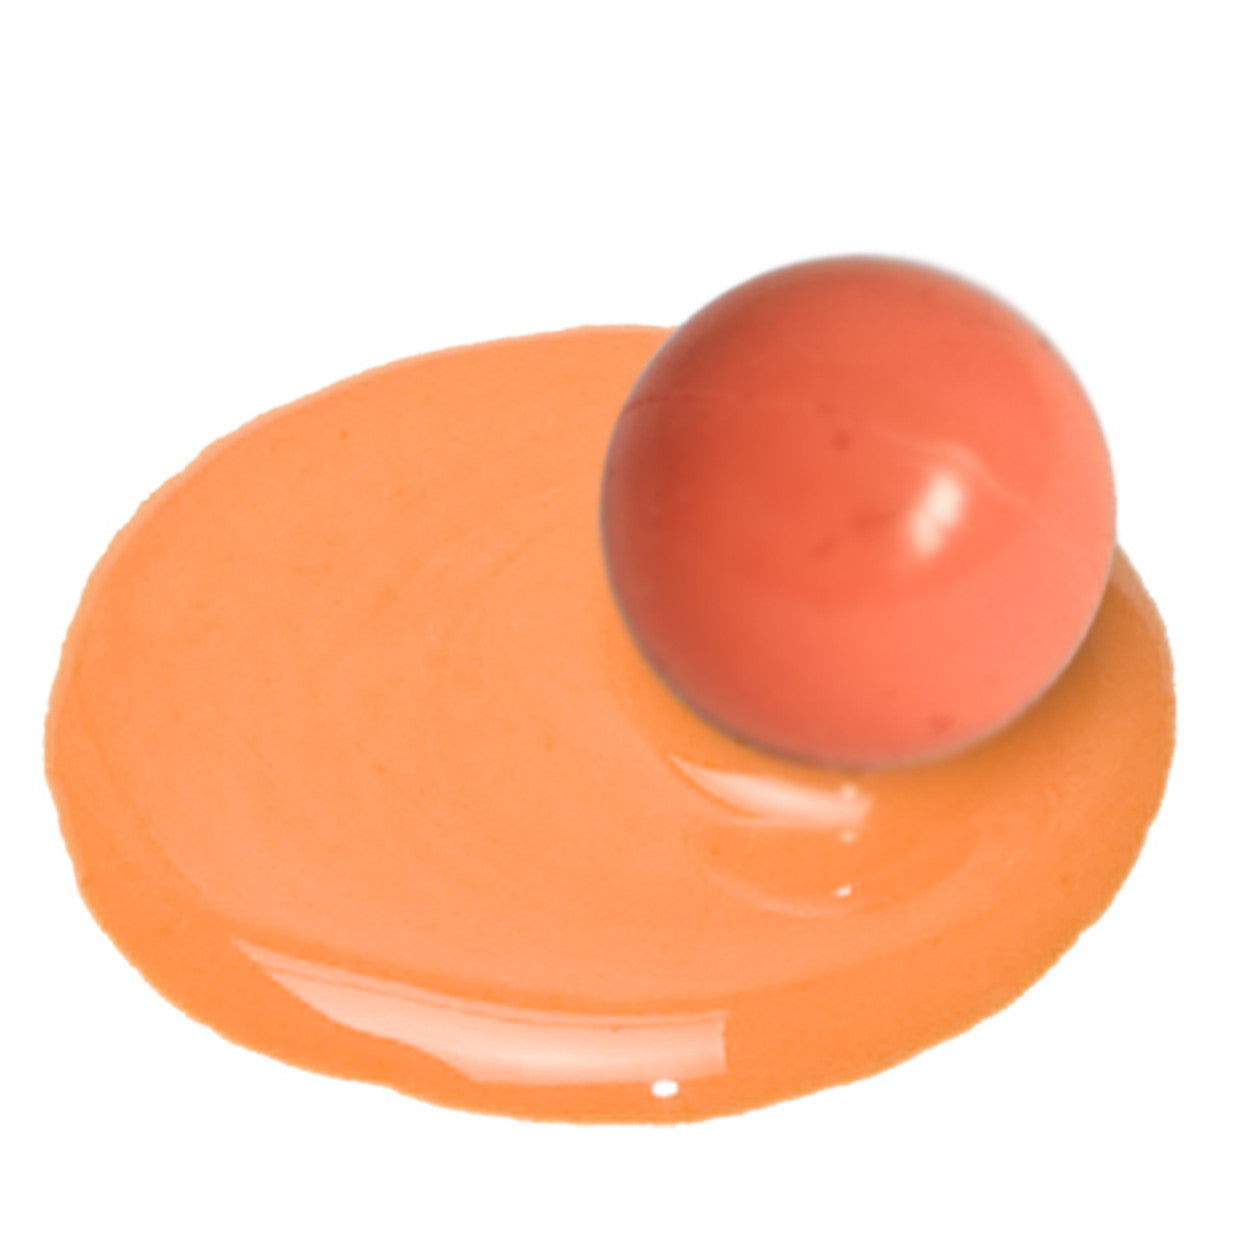 2000 Count Valken Infinity Paintballs - Orange/Orange - Valken Paintball